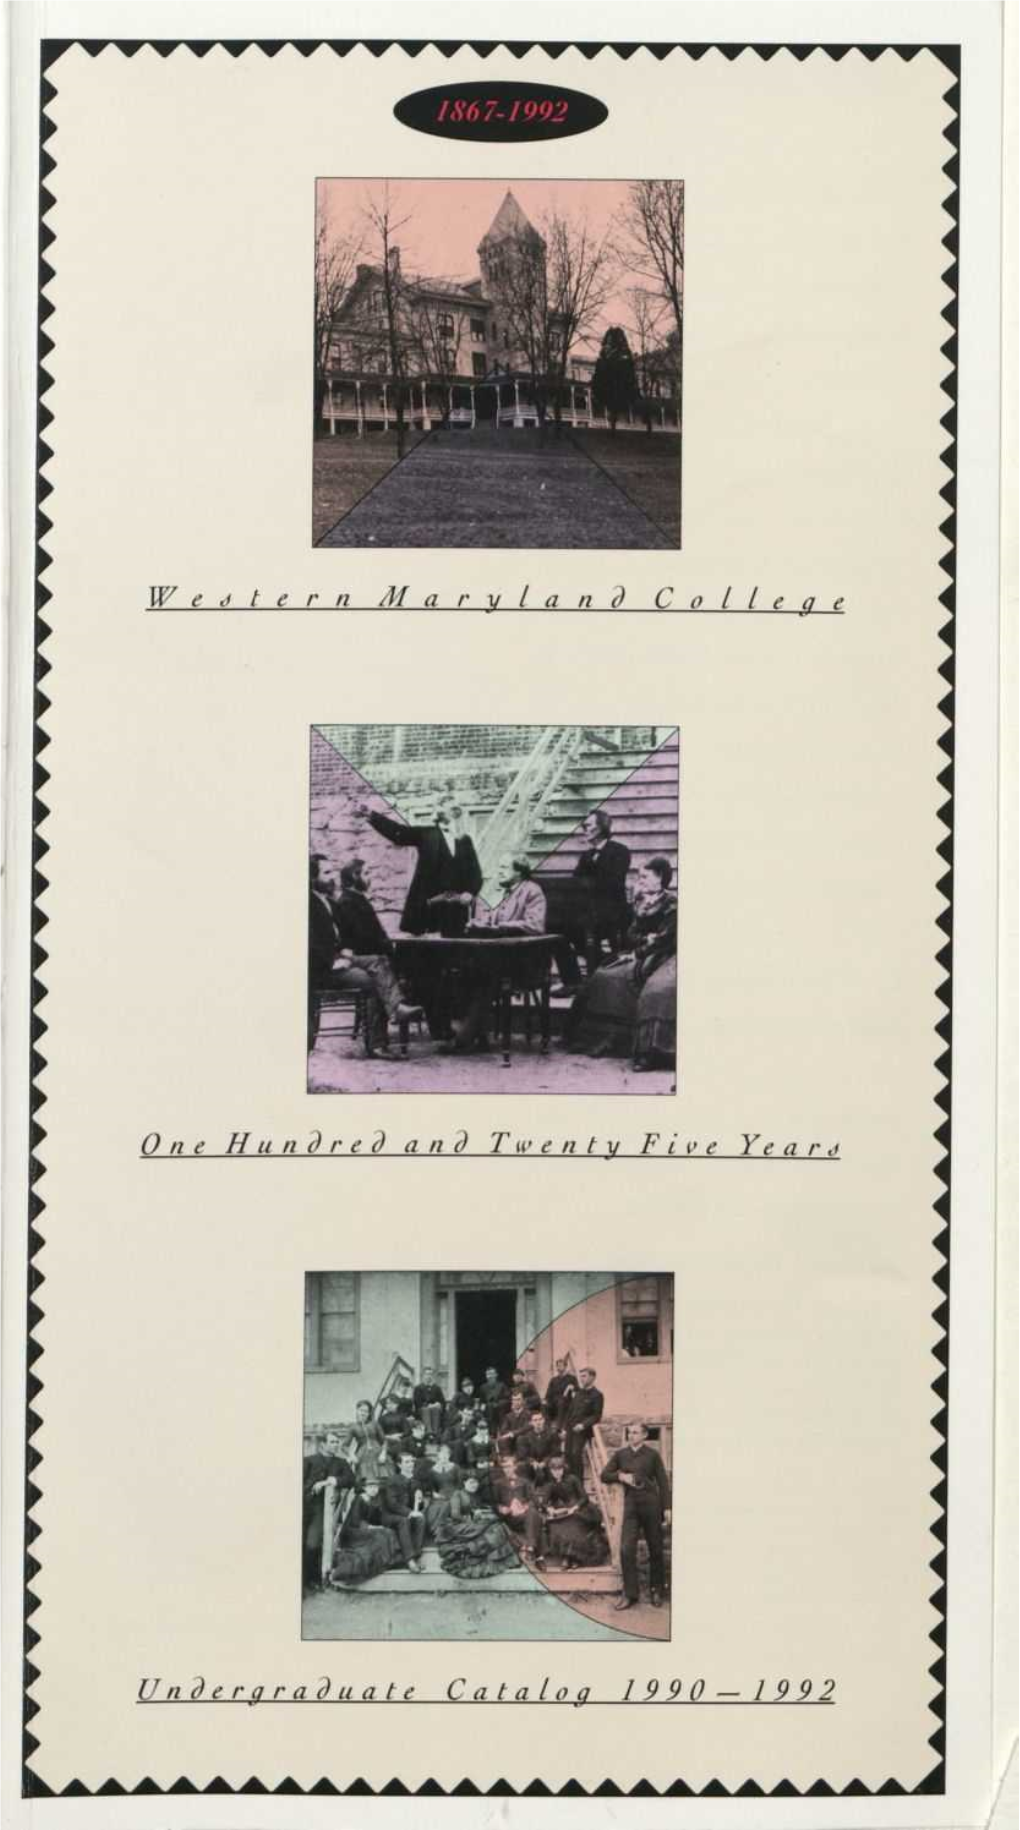 Catalog, 1990-1992